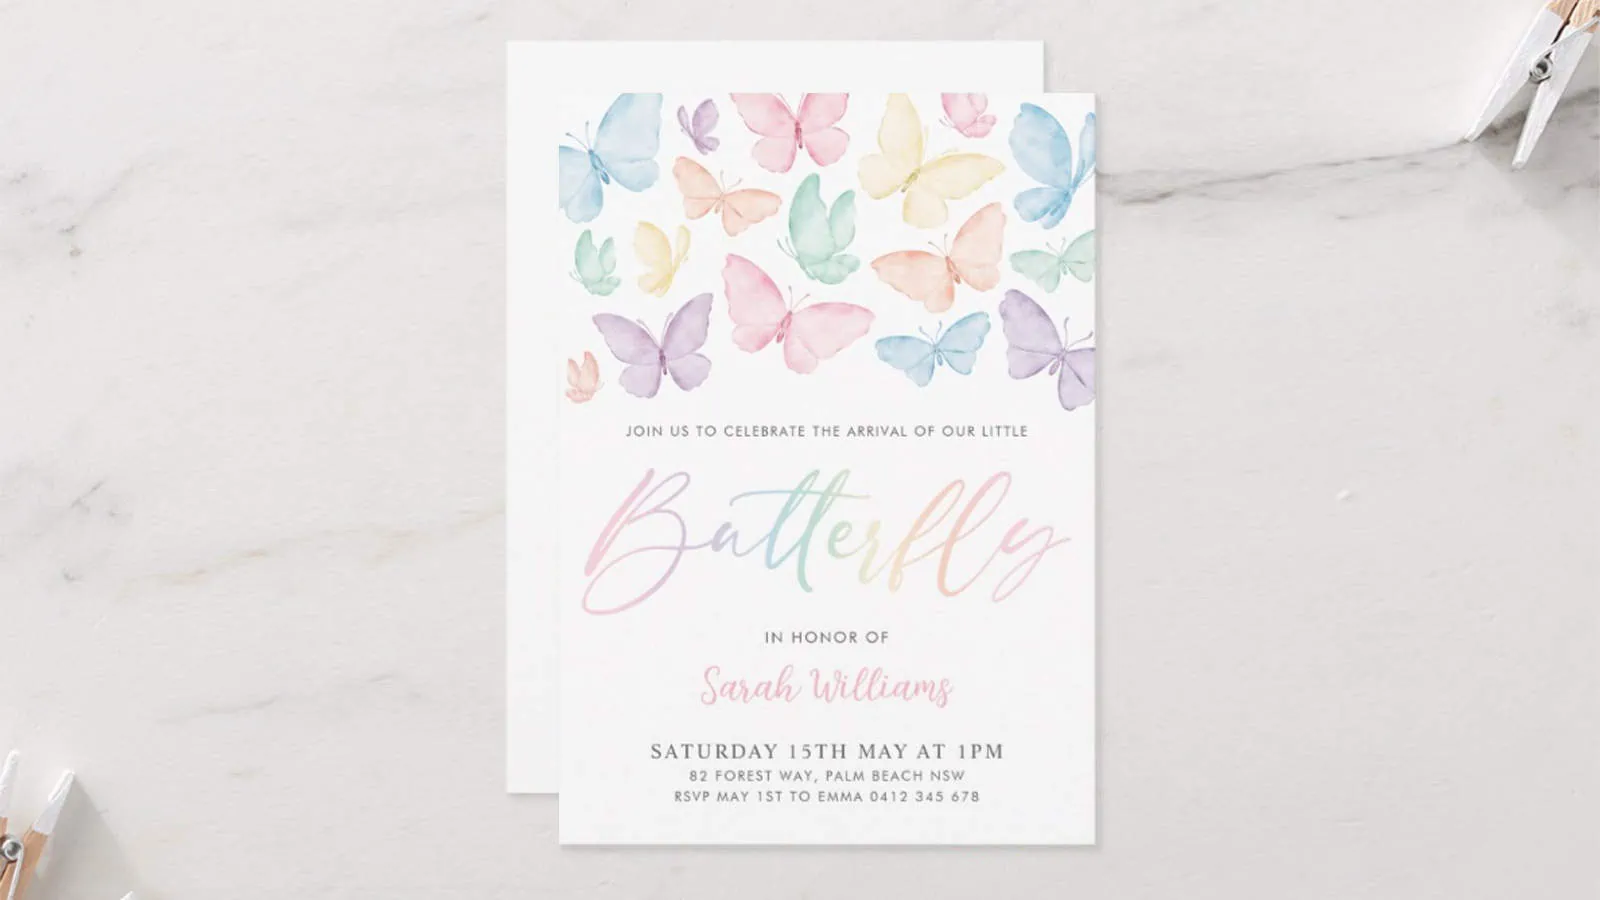 webbabyshower theme butterfly invitation